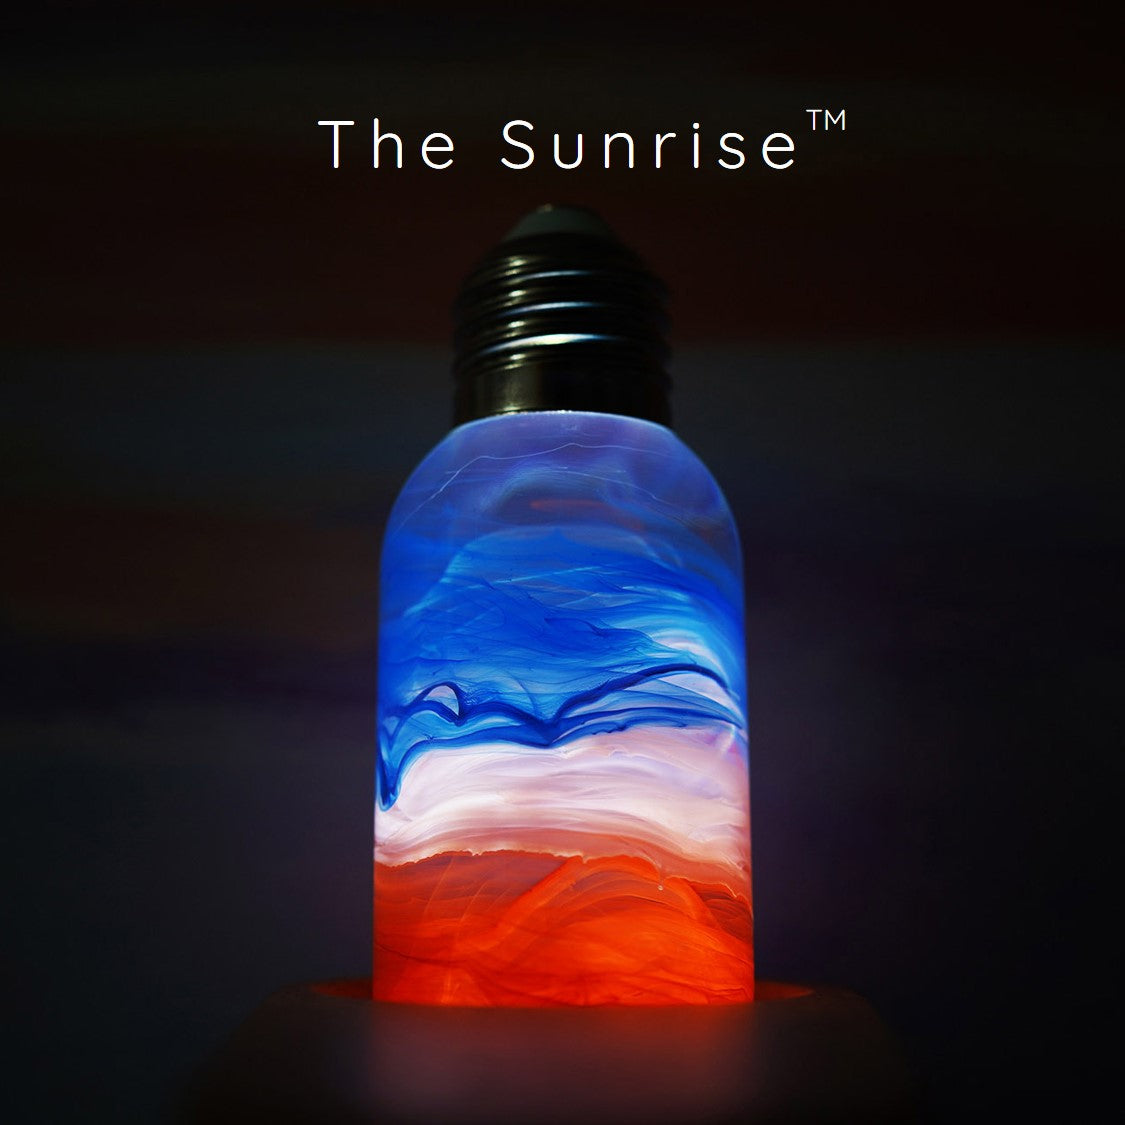 The Sunrise™